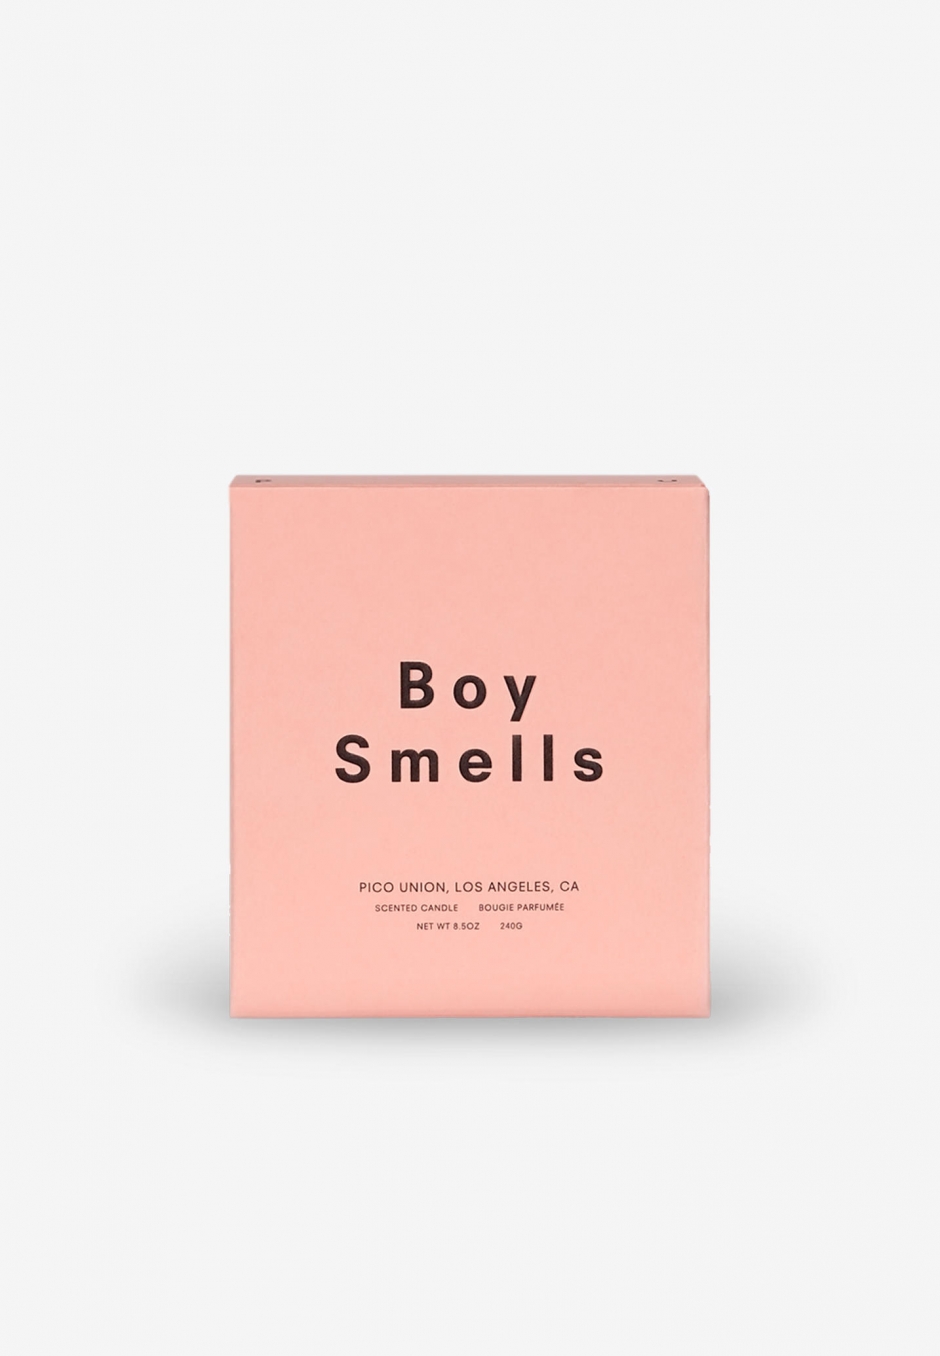 Boy Smells Cedar Stack Candle